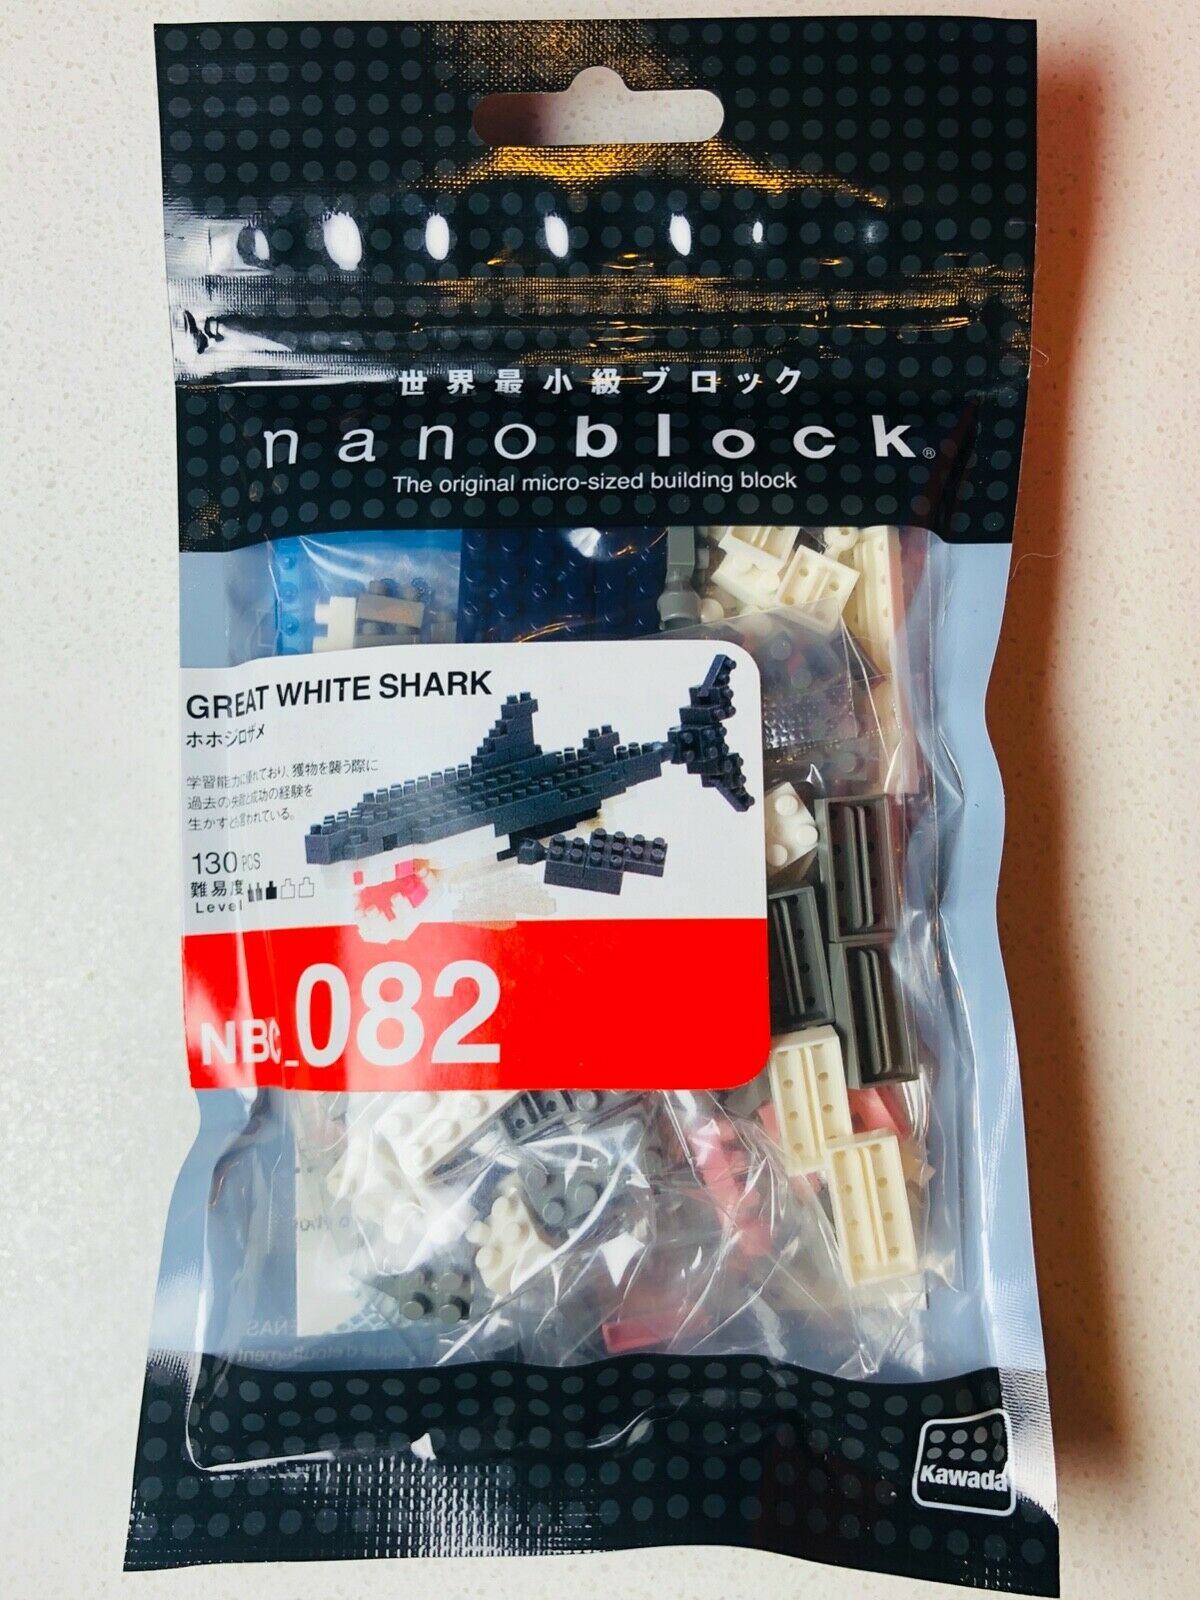 Great White Shark Deluxe Edition Nanoblock